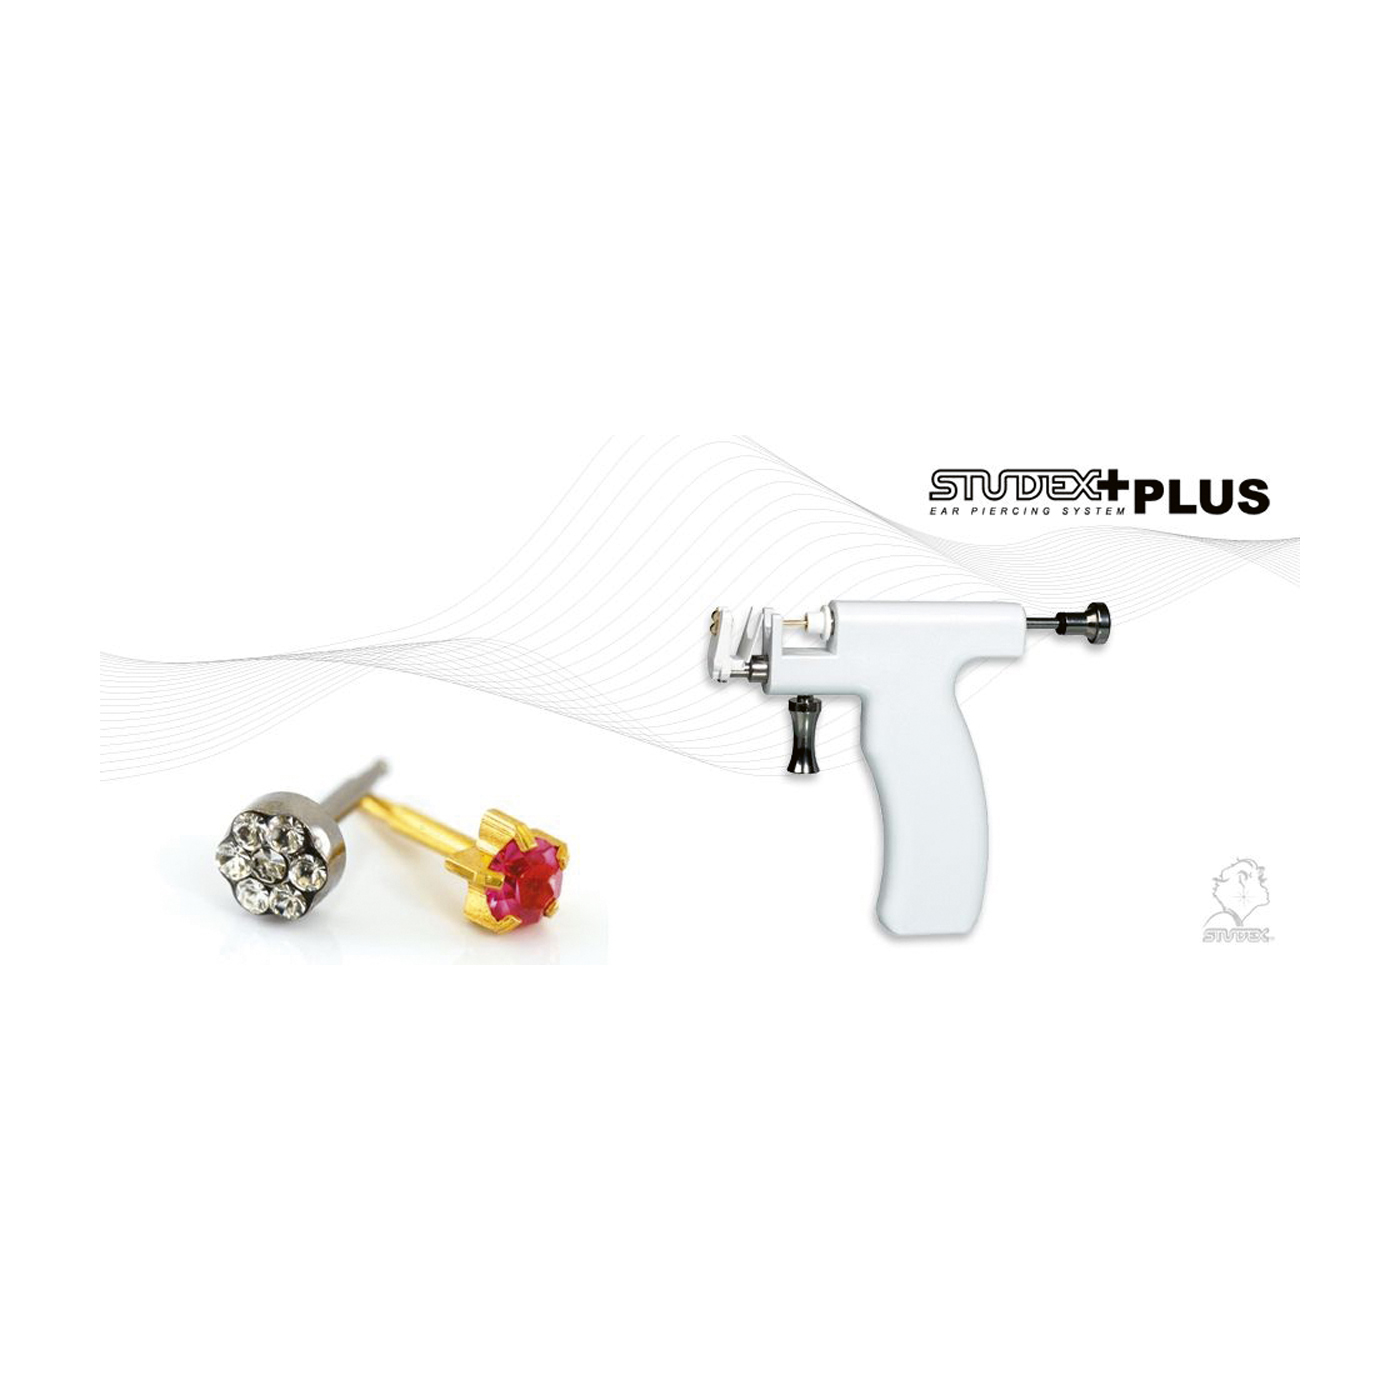 Plus System Ear Piercing Instrument - 1 set